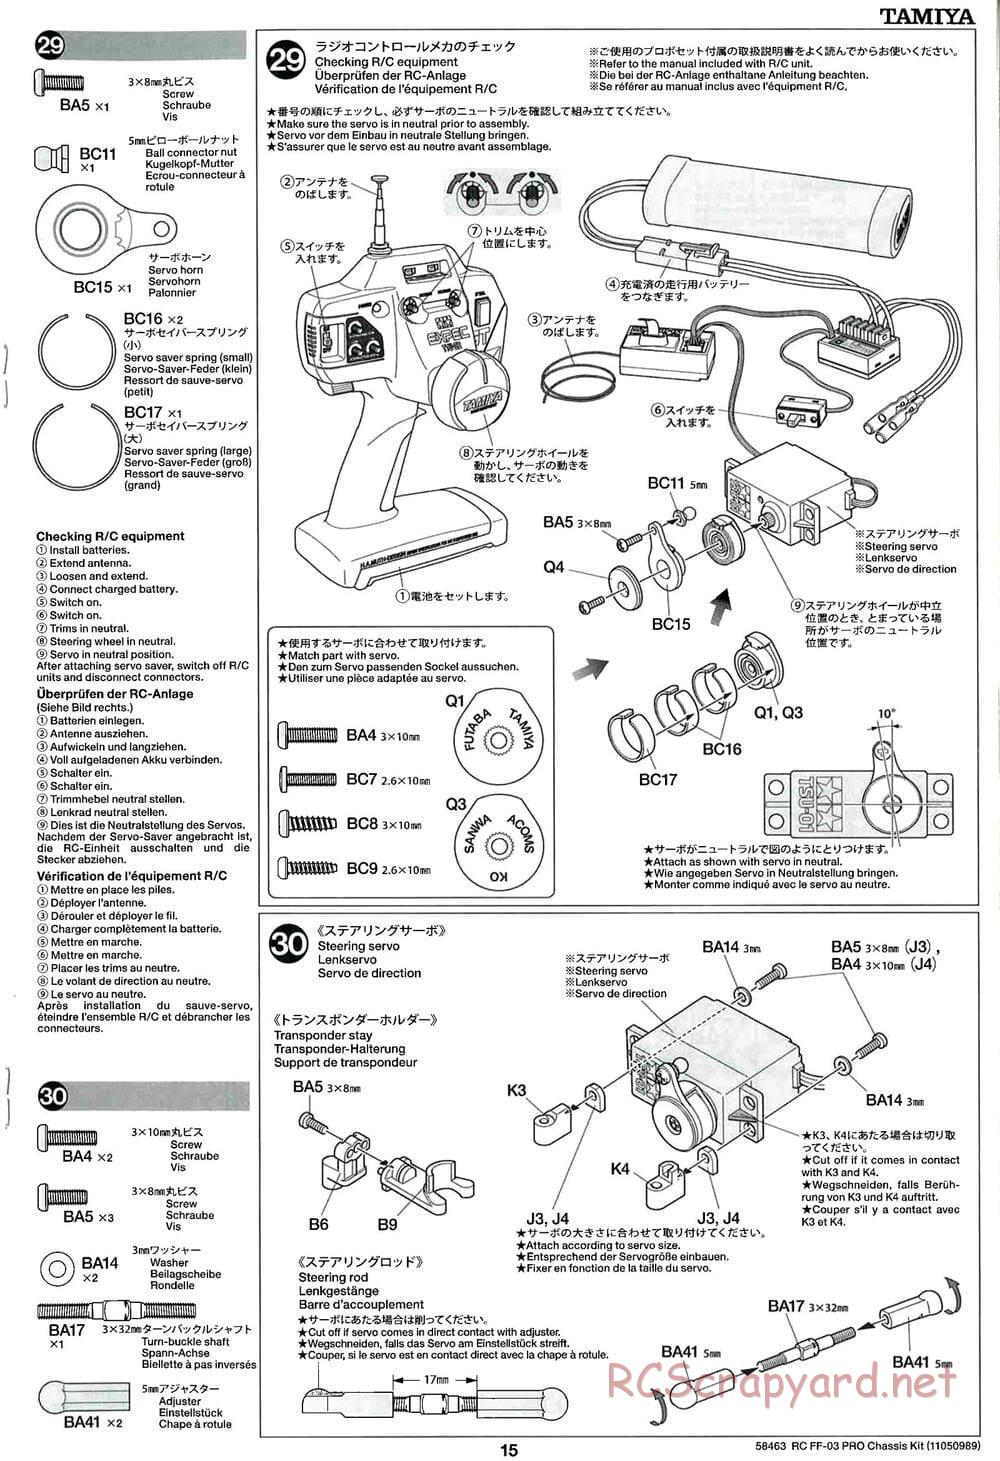 Tamiya - FF-03 Pro Chassis - Manual - Page 15